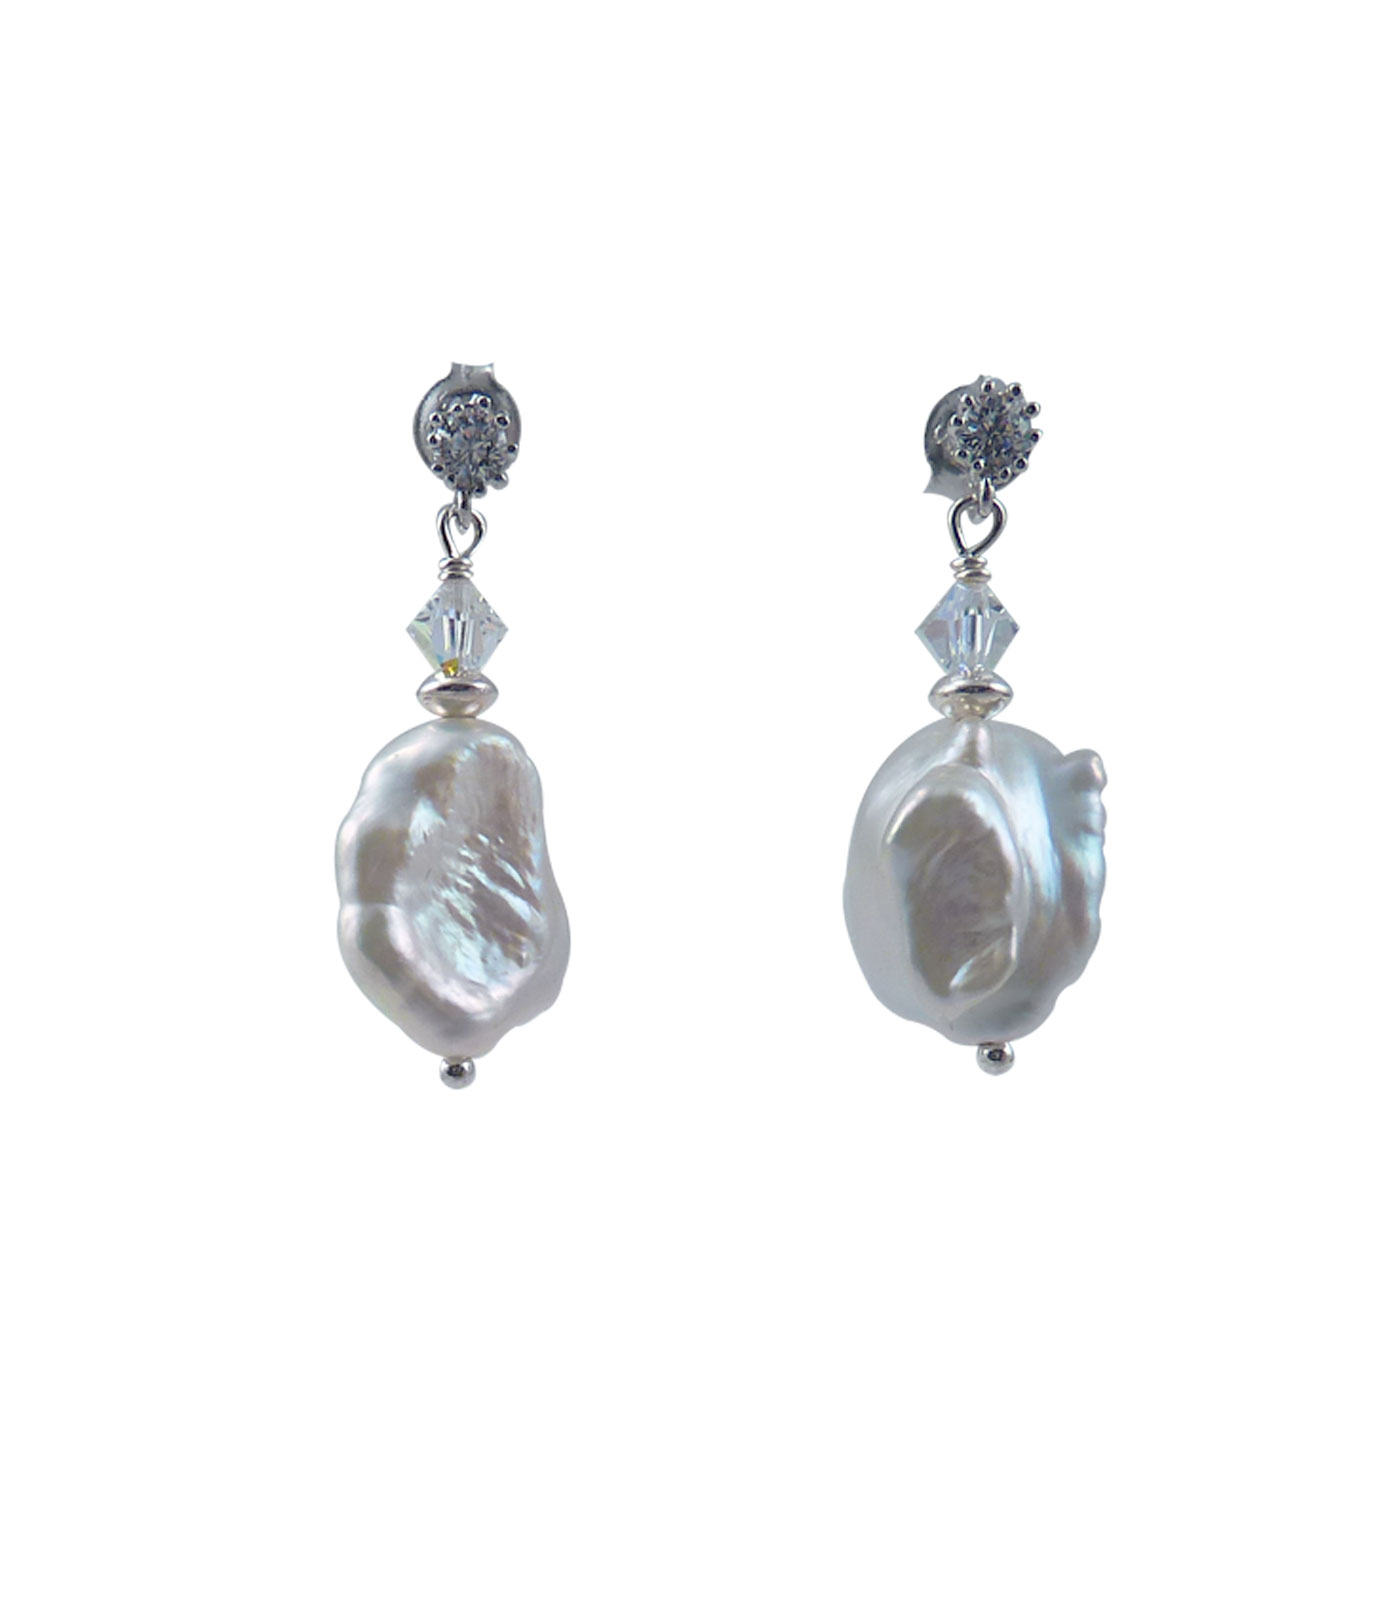 Pearl earrings white keshi pearls with Swarovski crystals